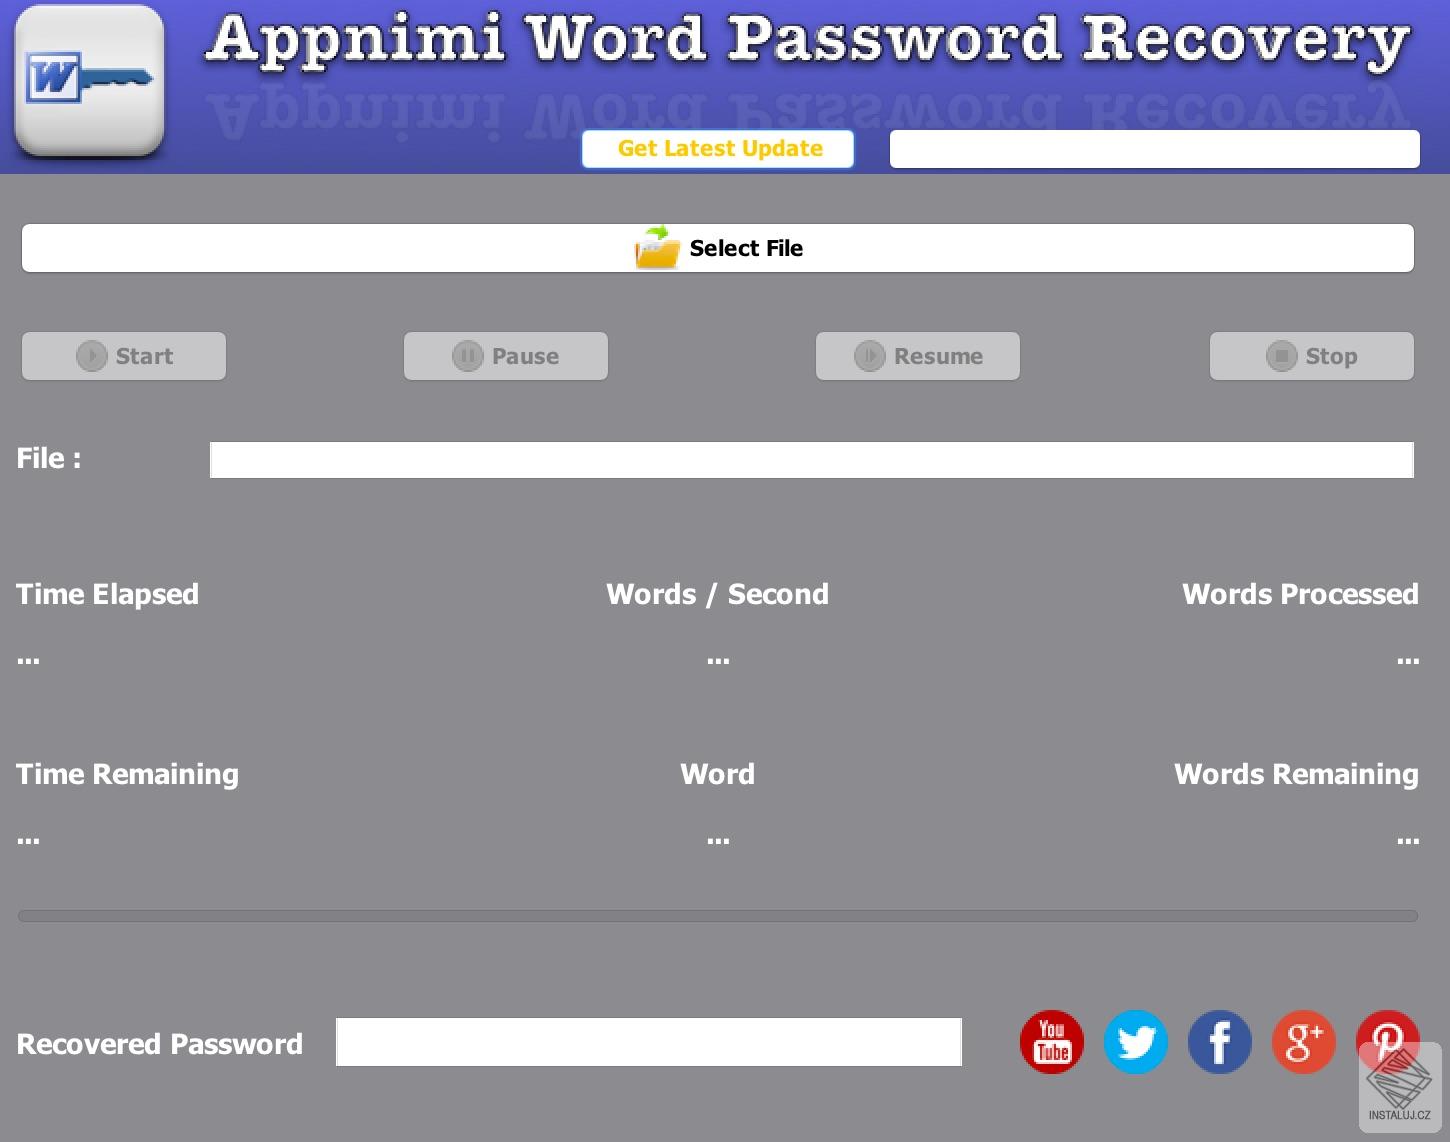 Appnimi Word Password Recovery